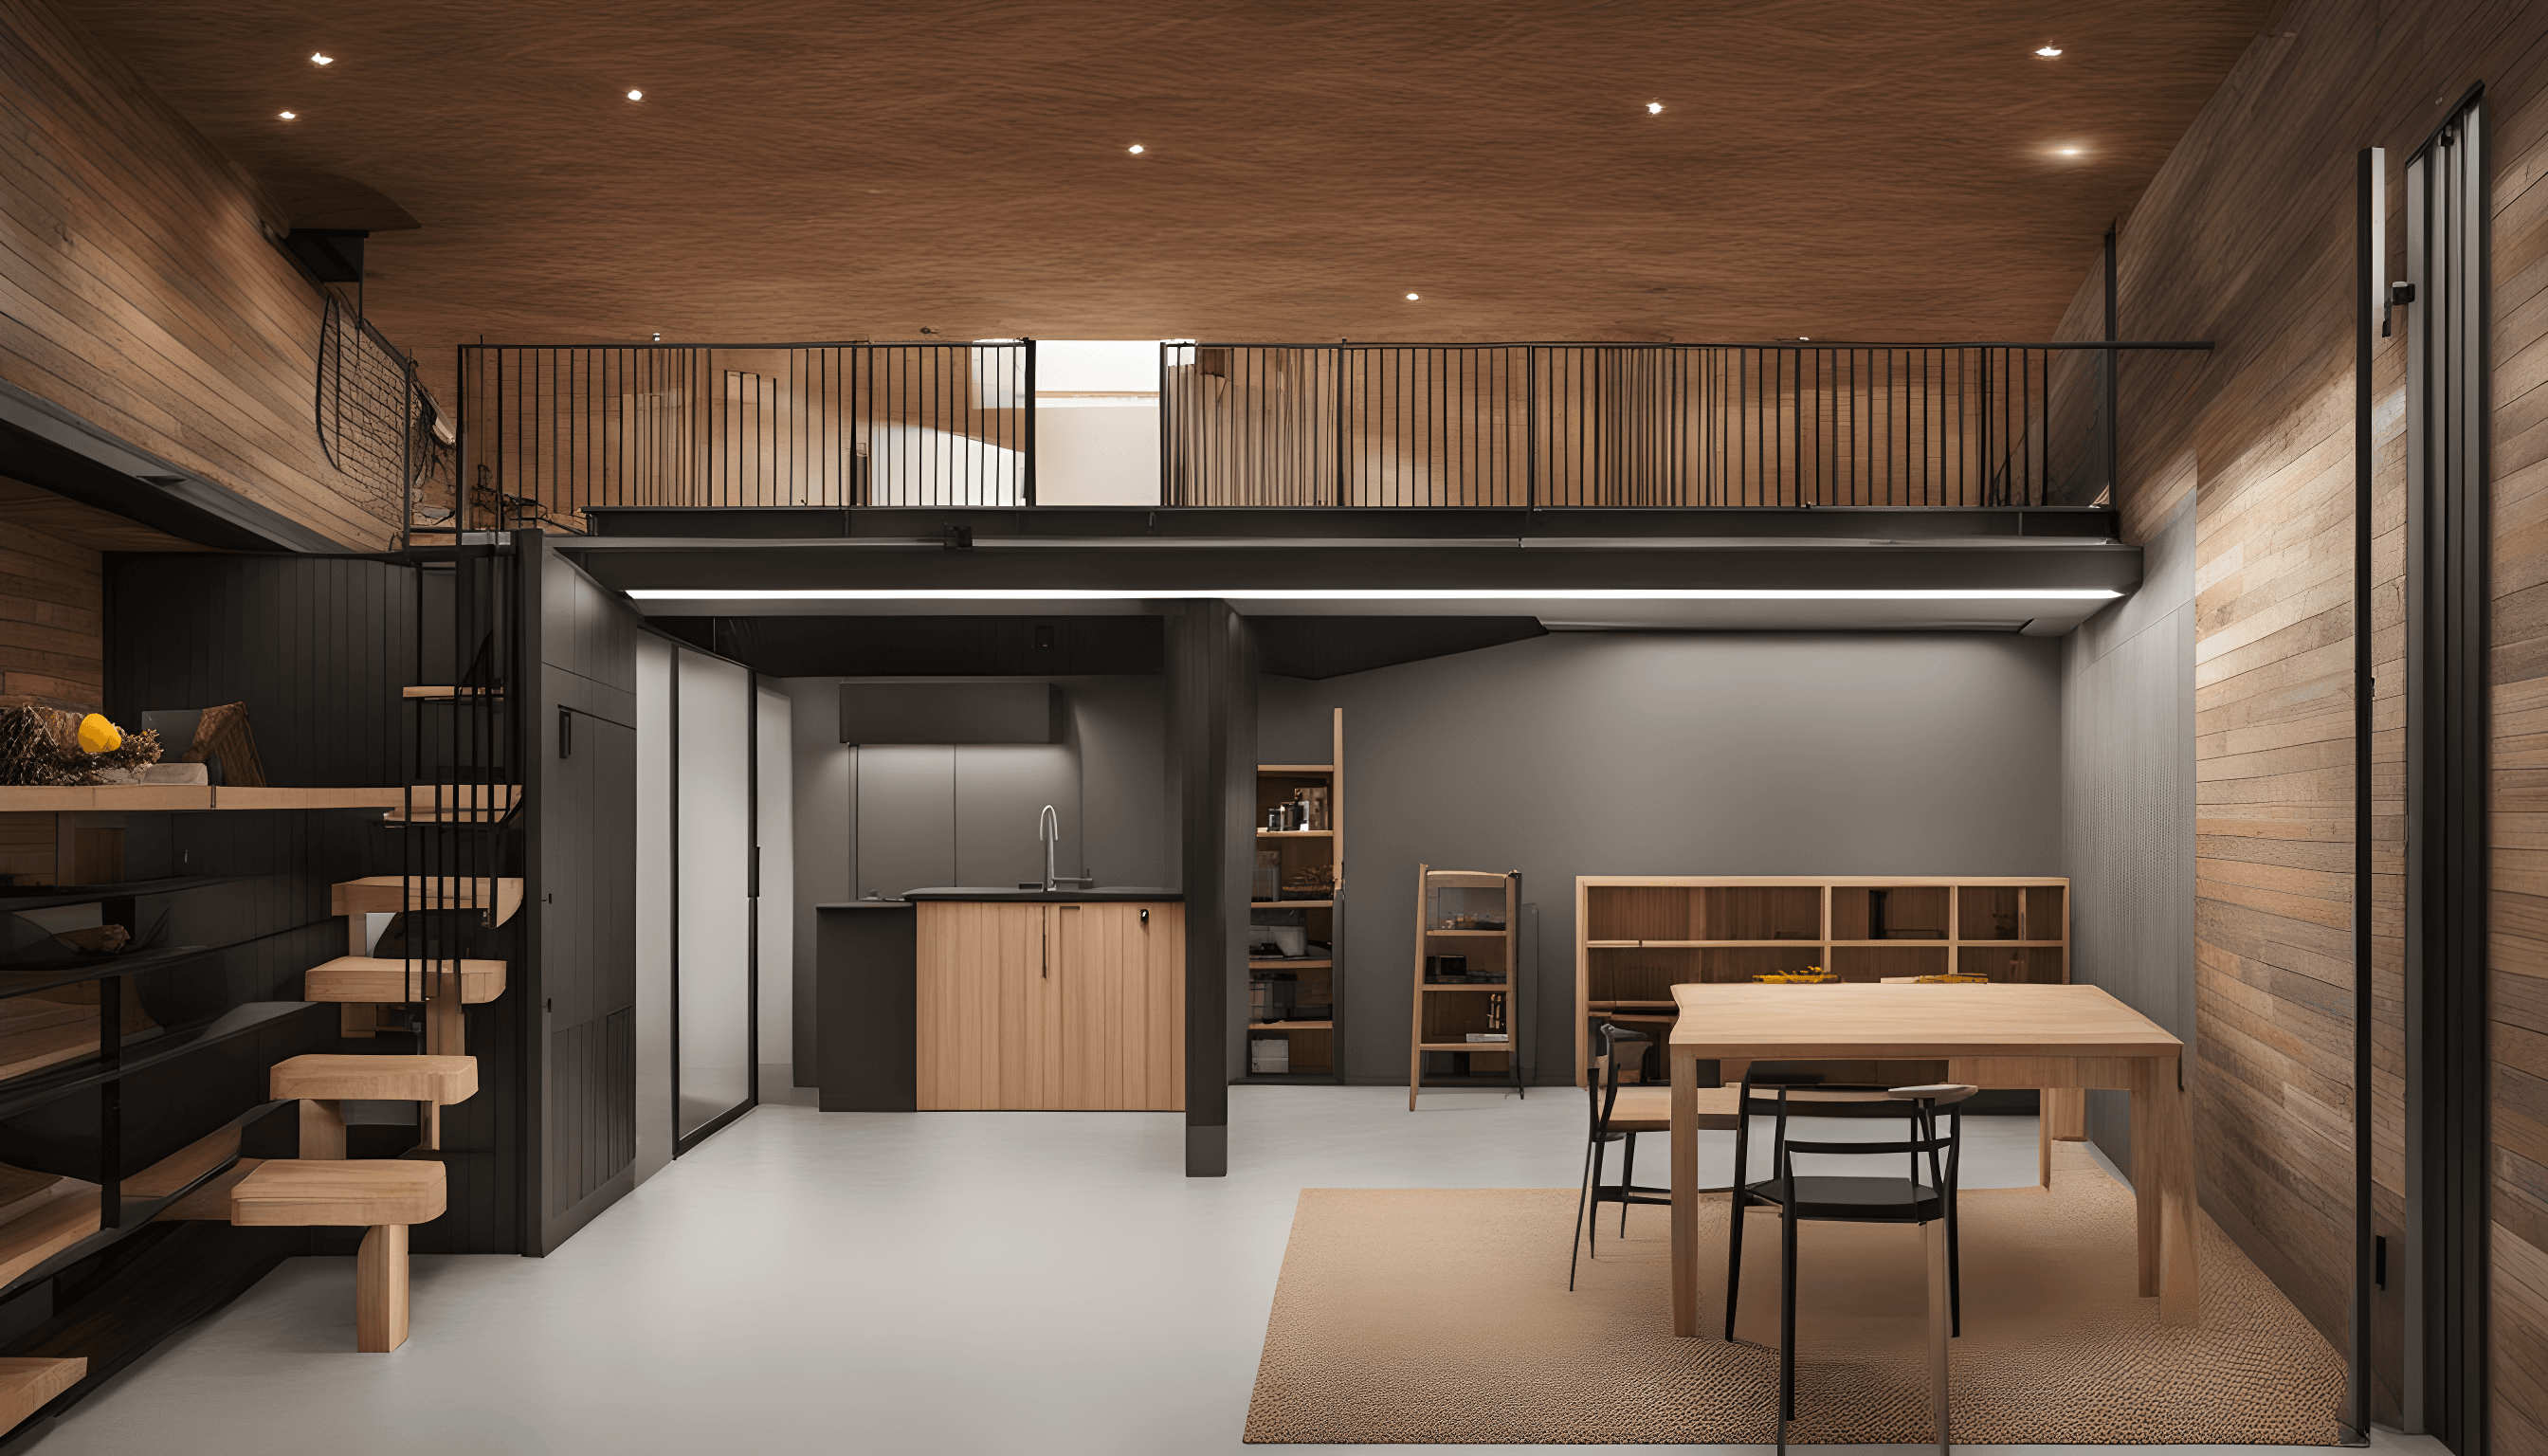 the-Storage-Shed-Design-in-the-mezzanine-floor.jpg